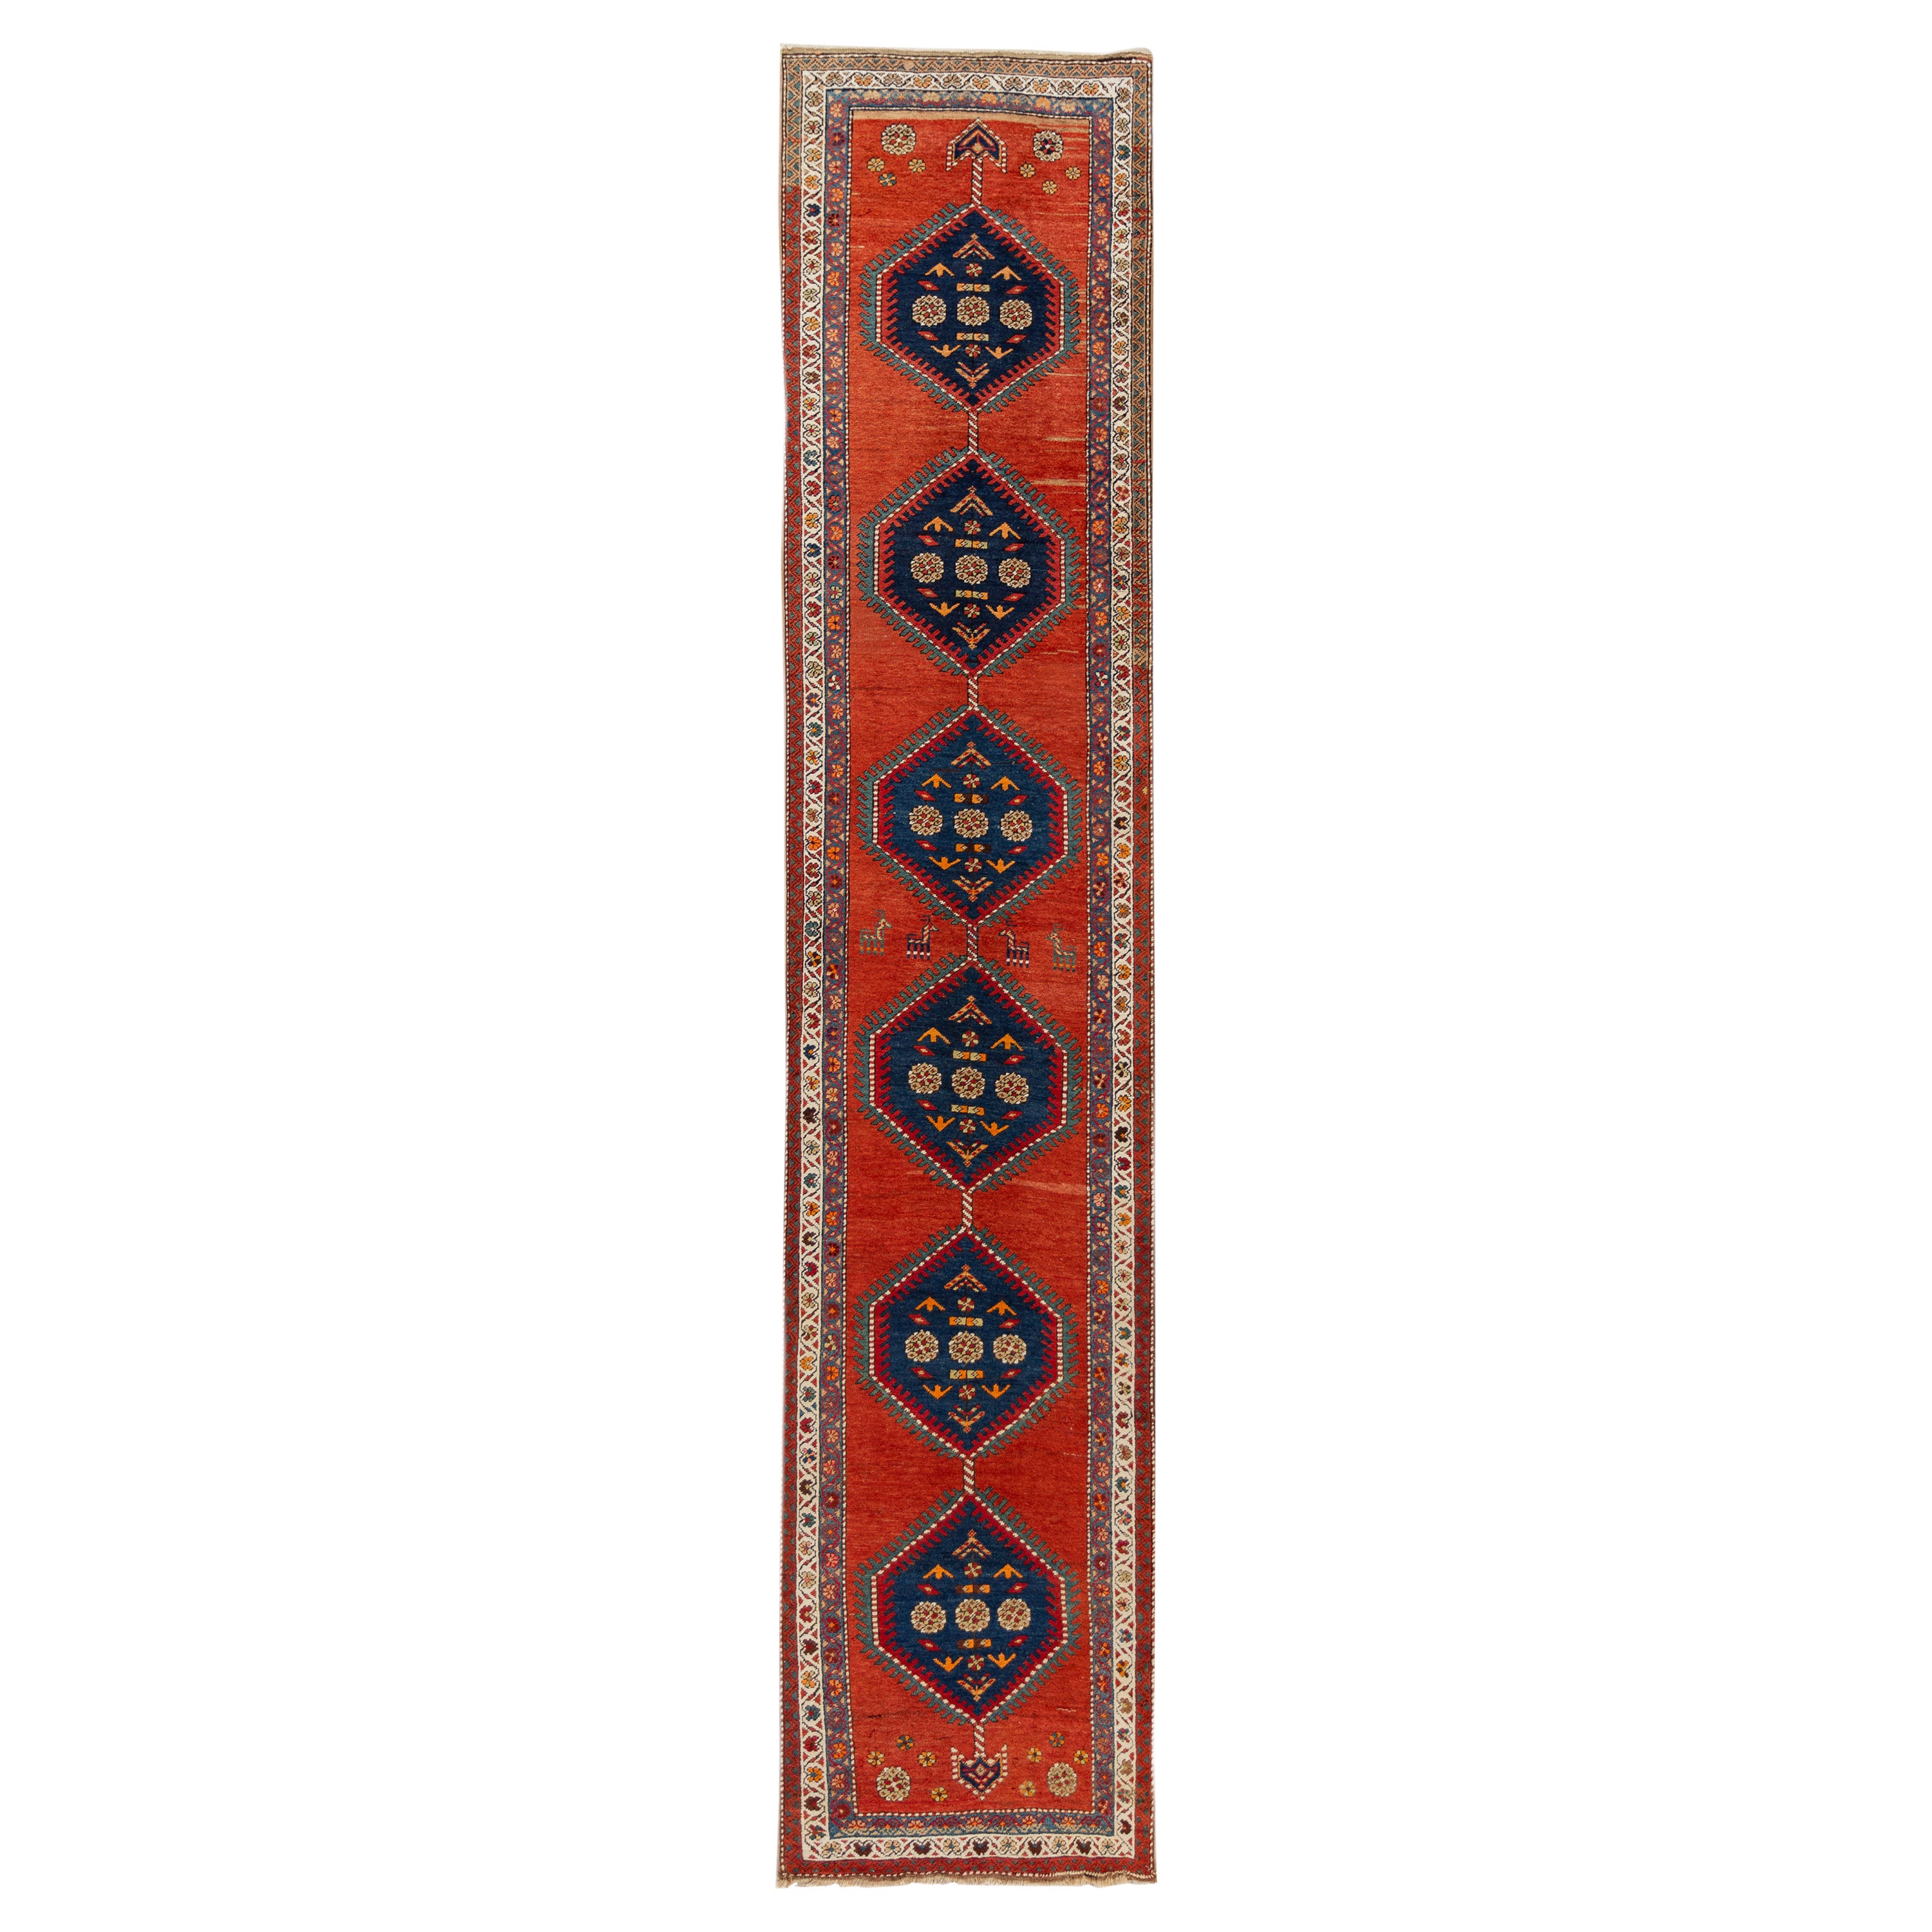 Antique Heriz Handmade Tribal Long Wool Runner With Rust-Orange Color For Sale